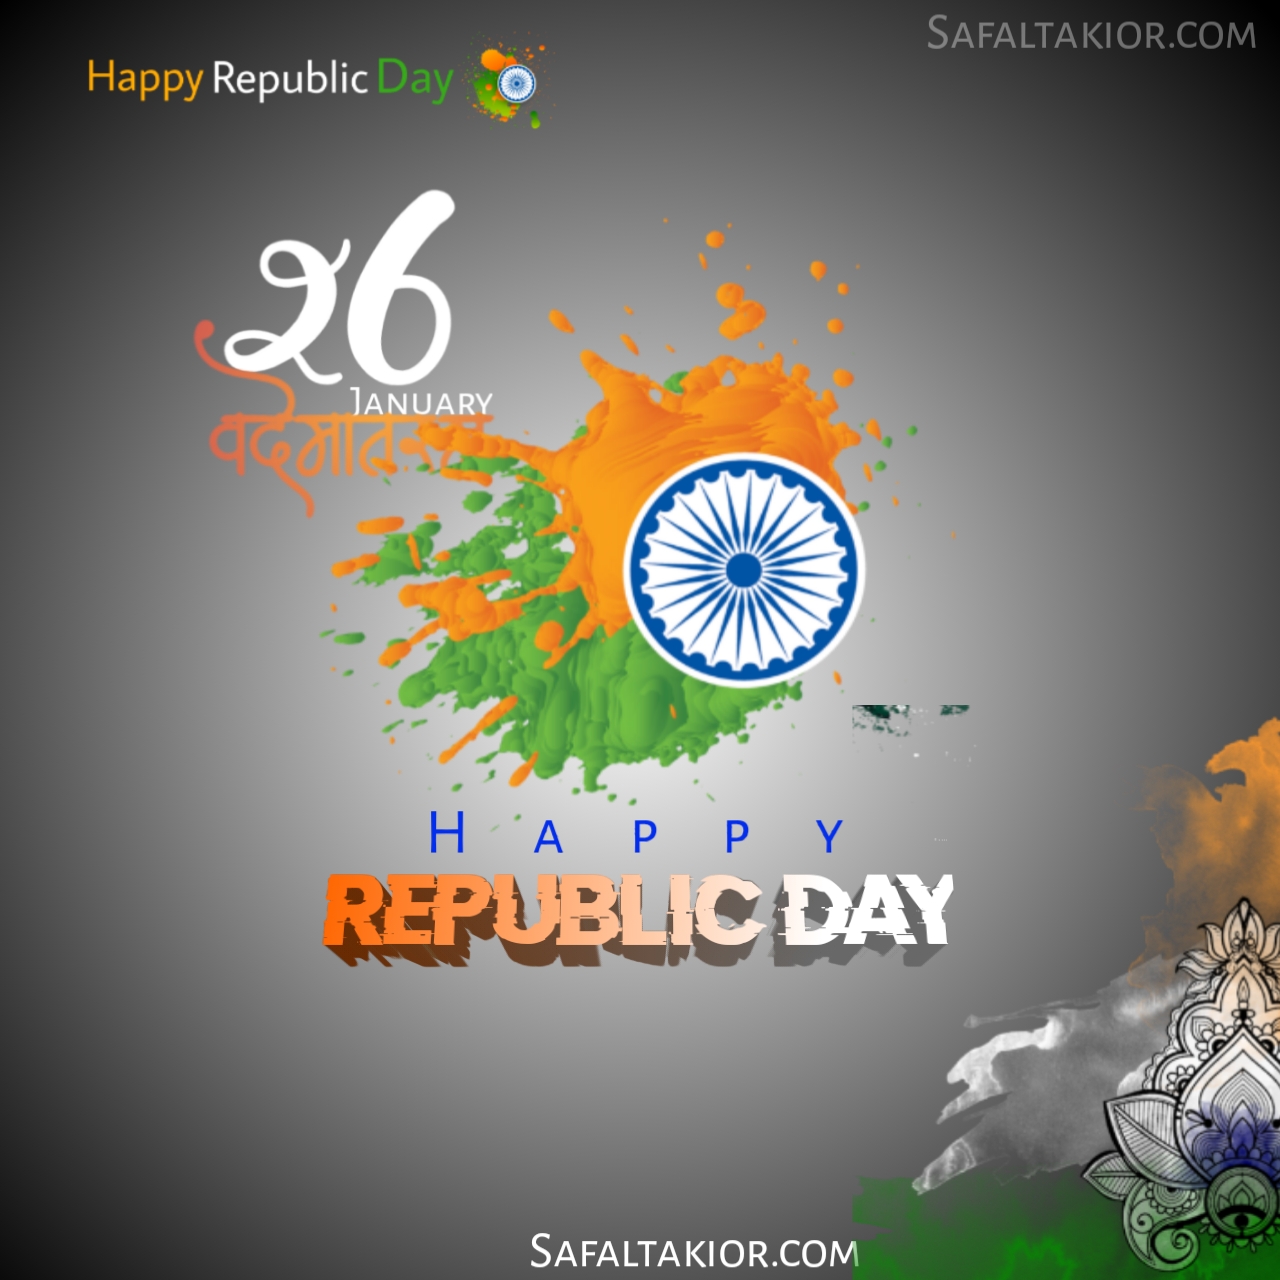  India Republic Day Images